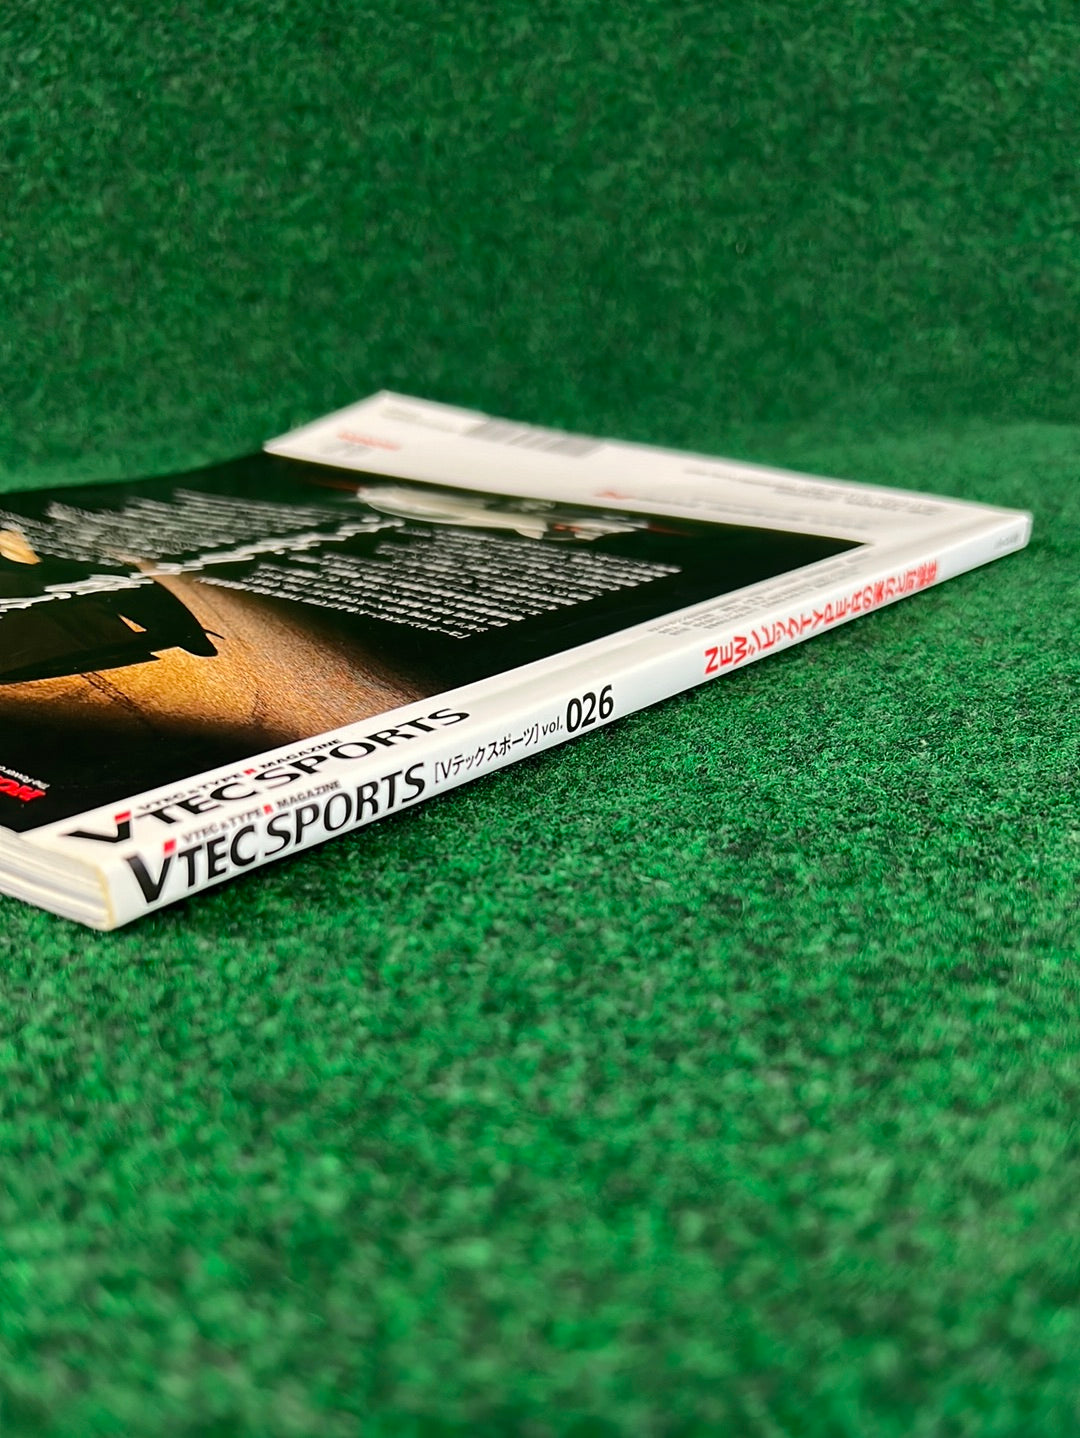 VTEC SPORTS Magazine - Vol. 026 (2)